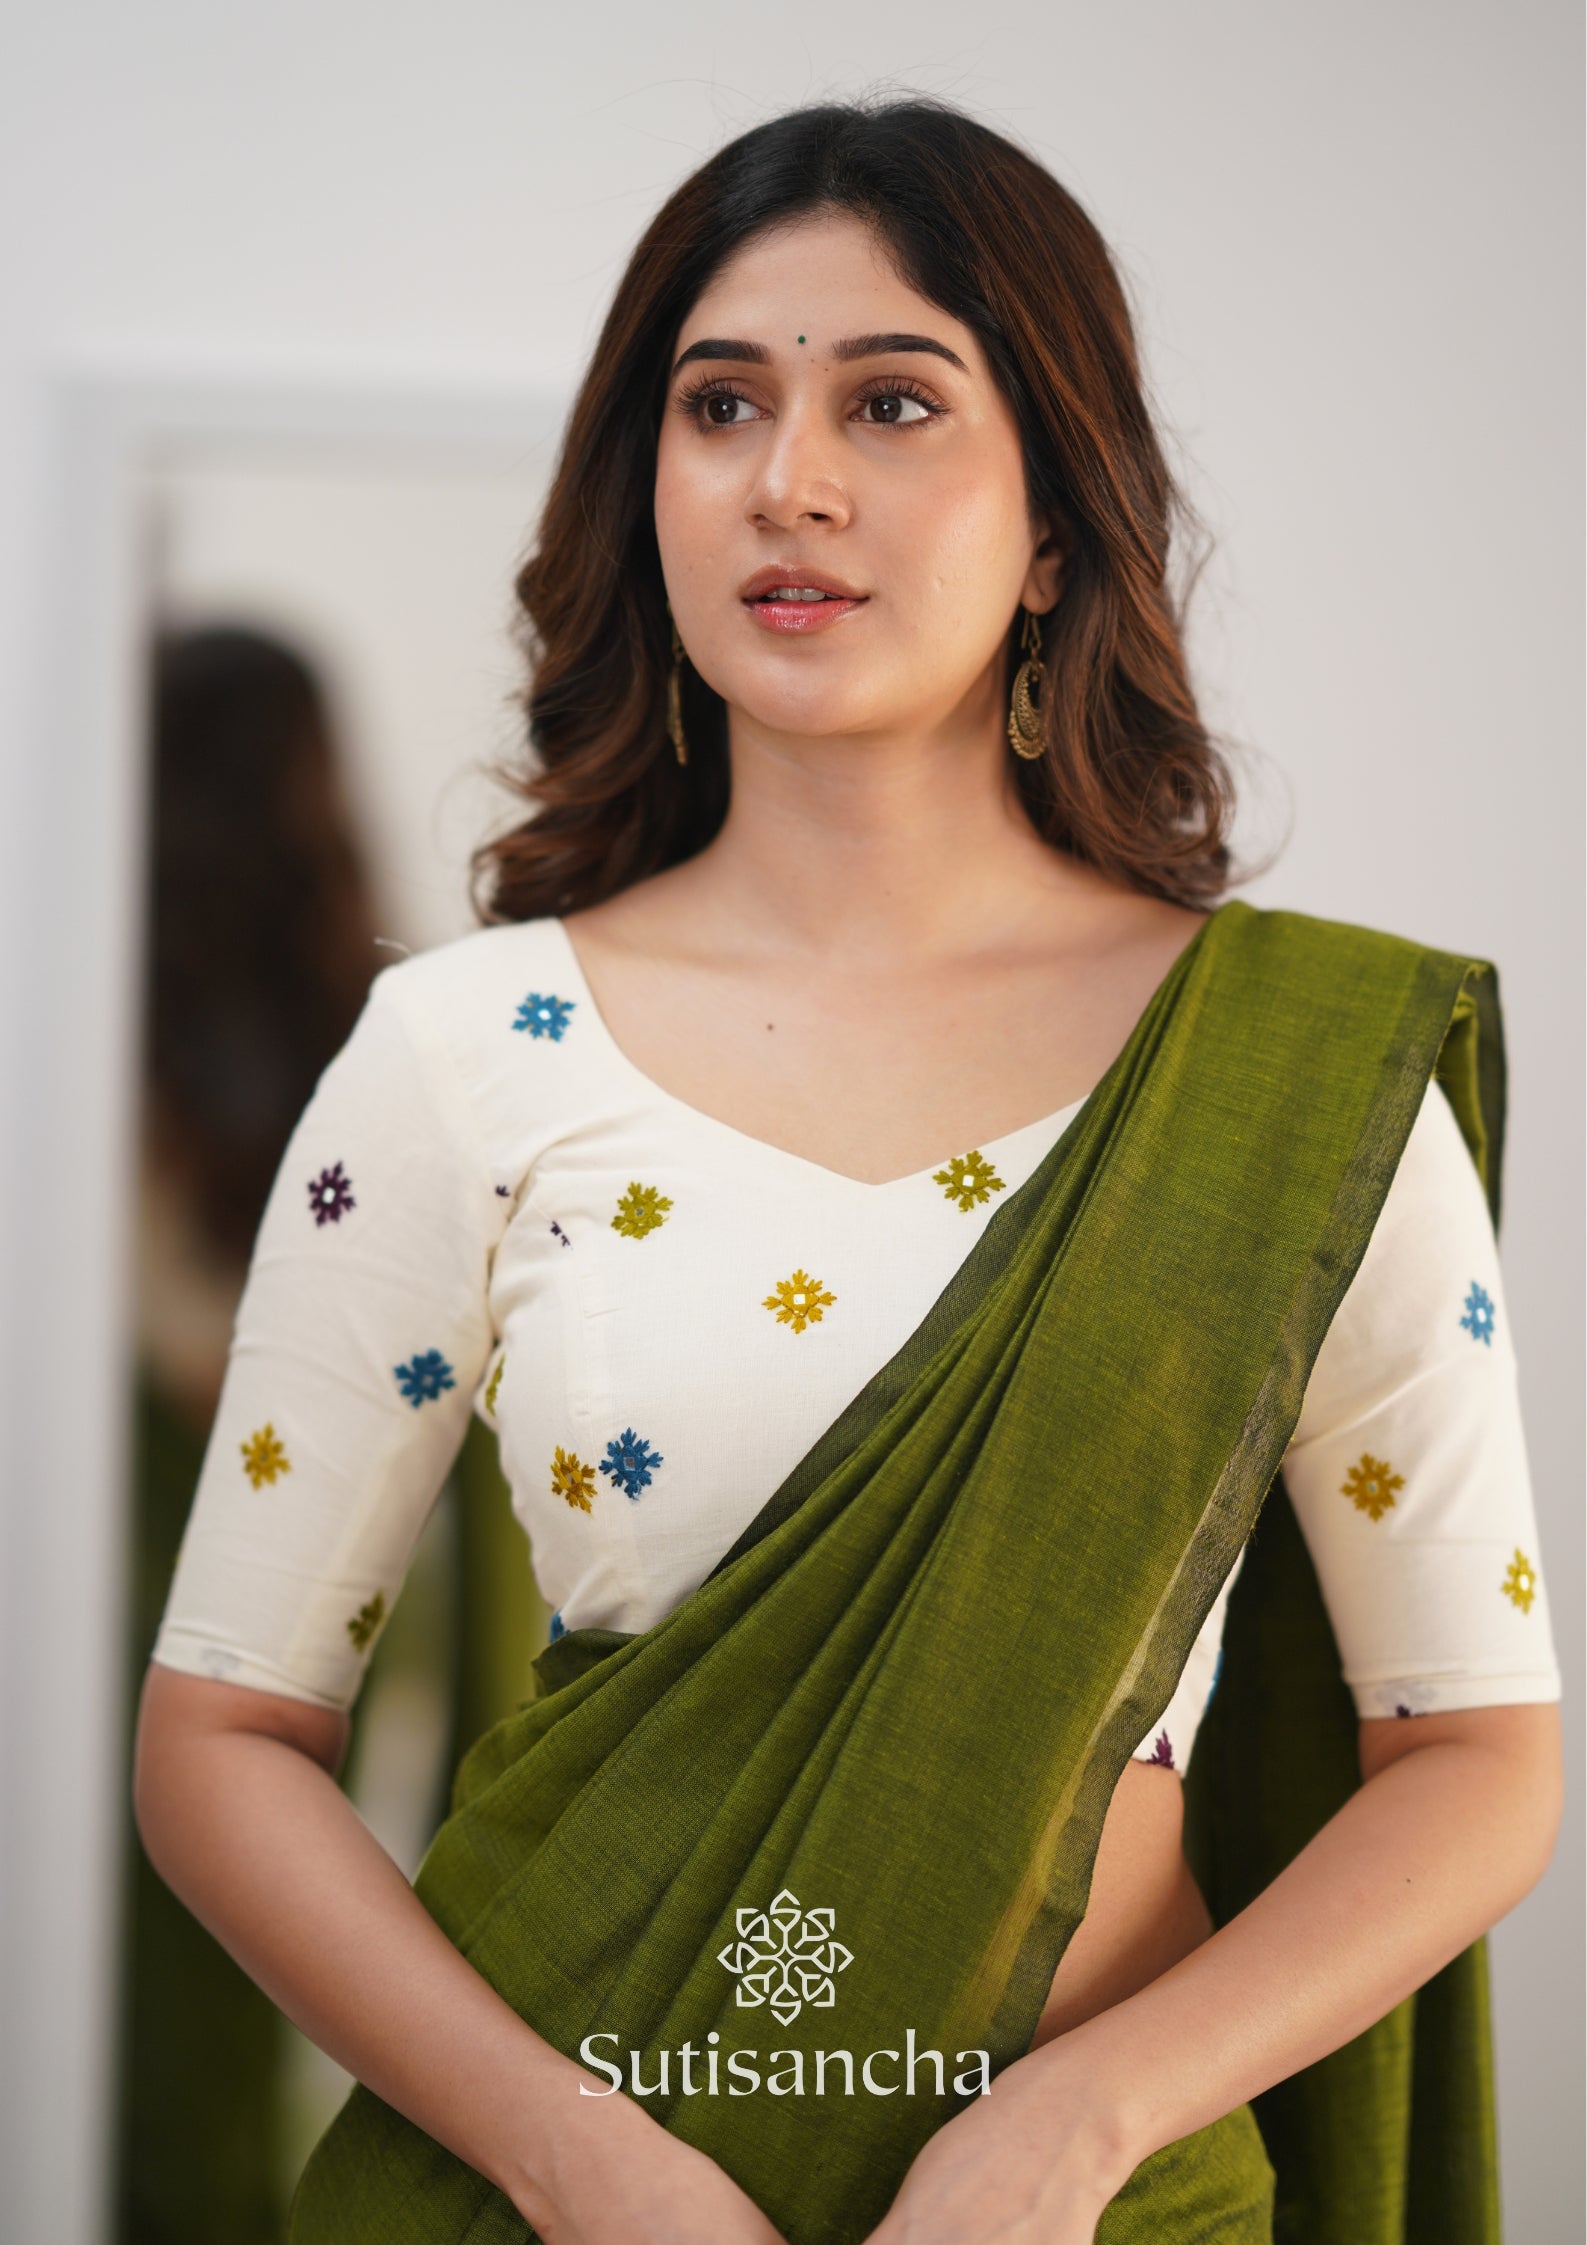 Sutisancha Mehndi Handloom Cotton Saree With Blouse